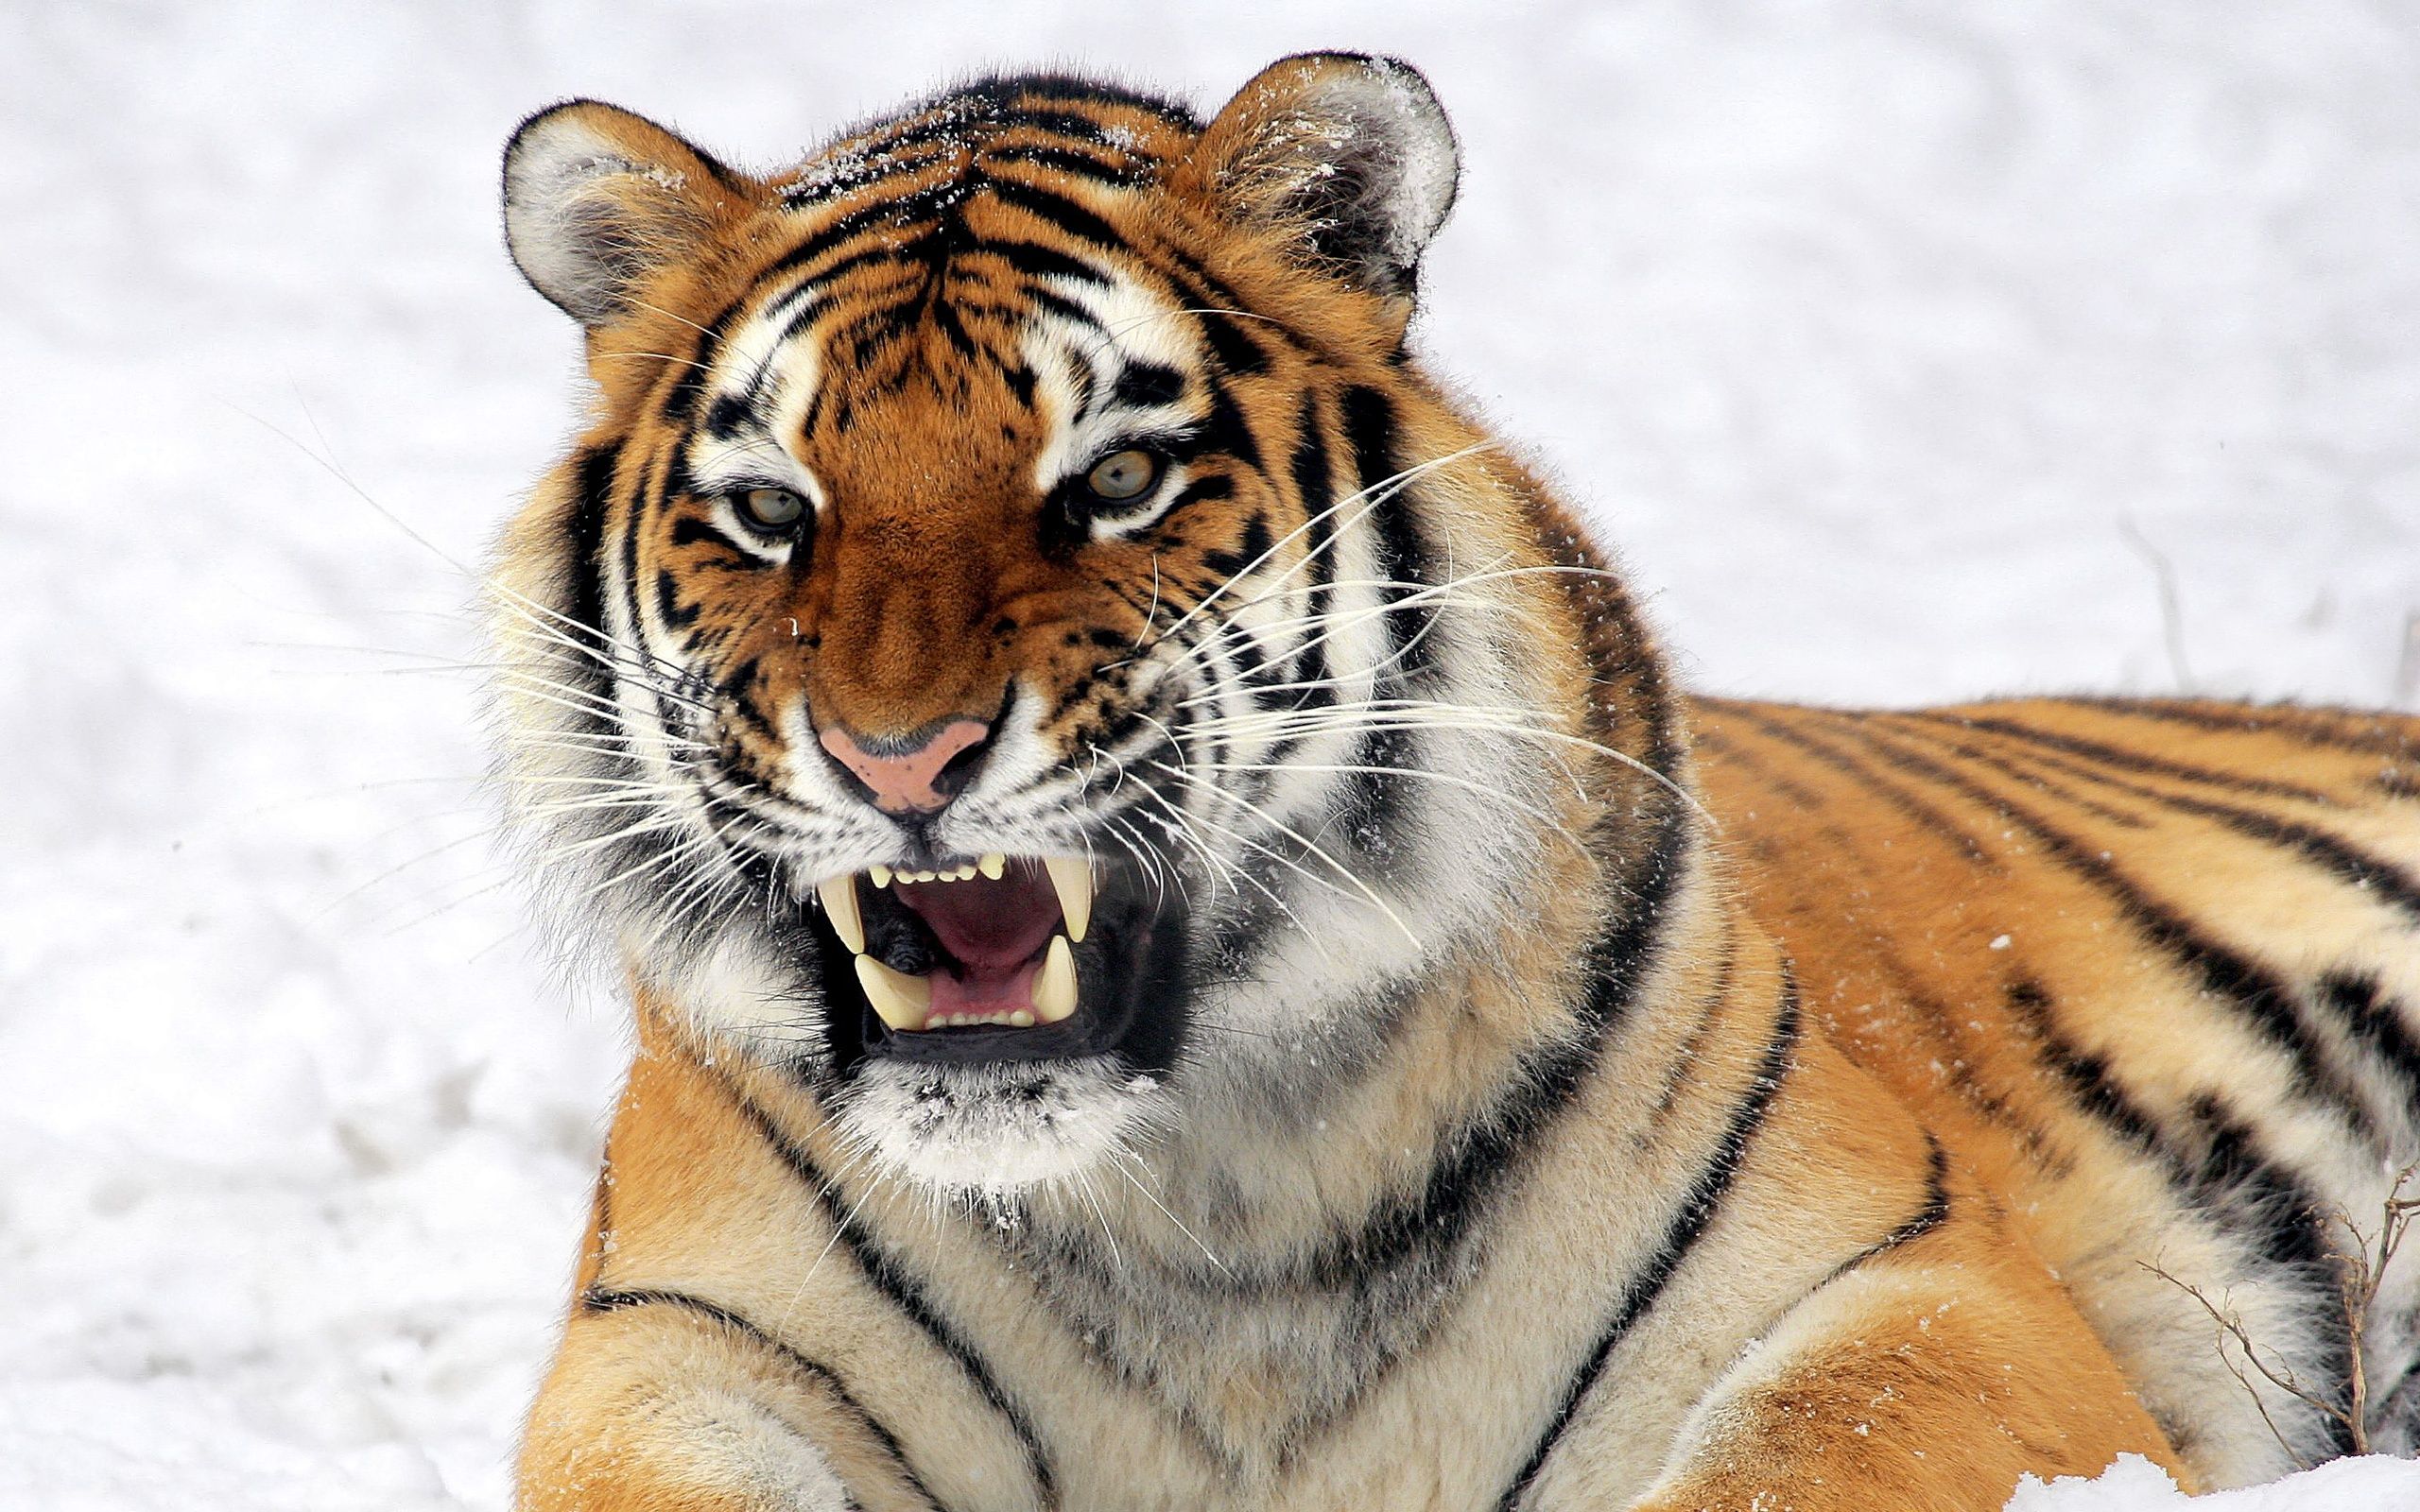 Wild Tiger Predator Wallpaper in jpg format for free download